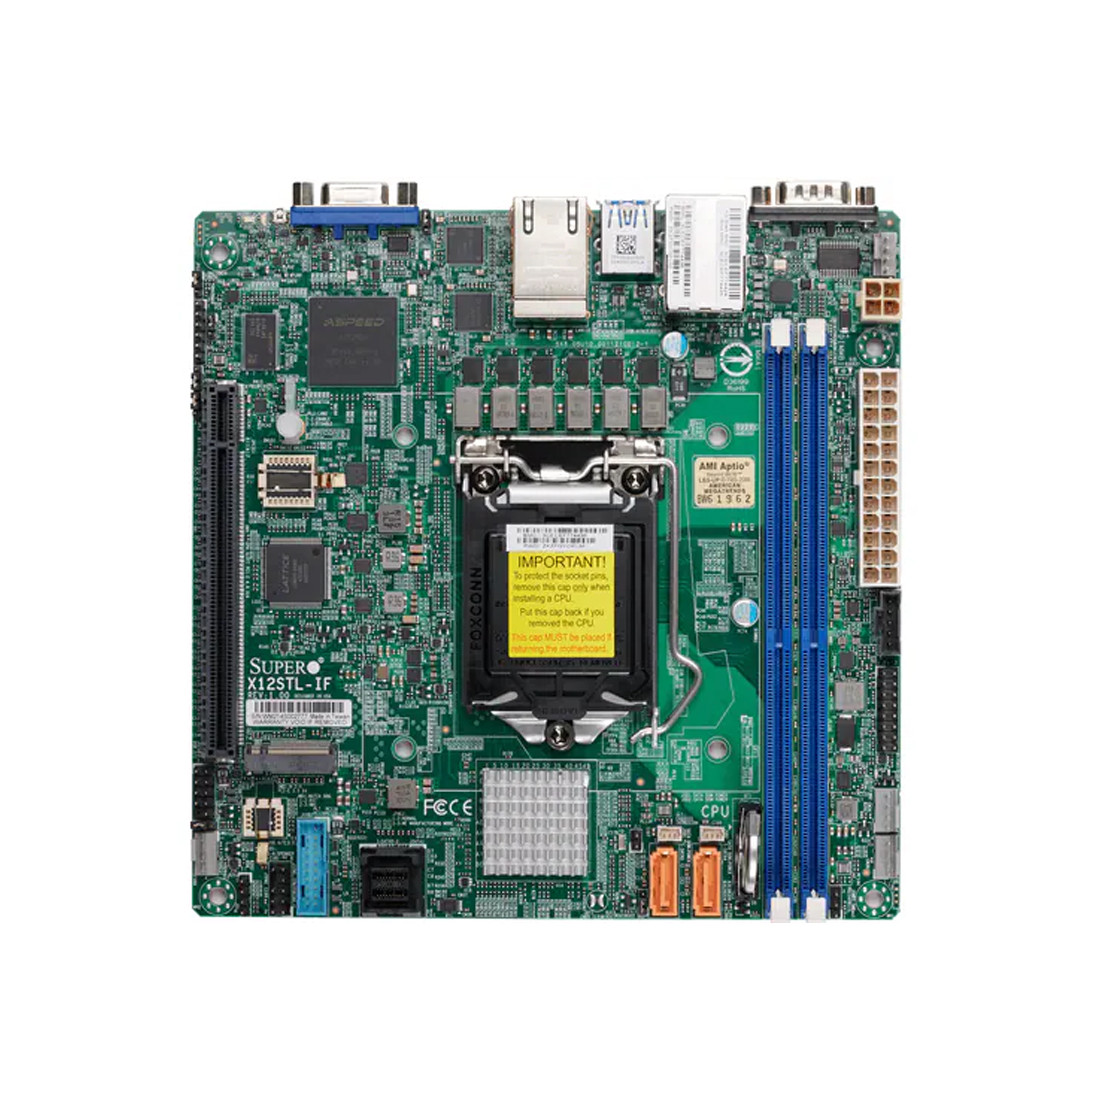 Материнская плата сервера Supermicro X12STL-IF-O, поддержка процессоров Intel, PCIe 4.0, IPMI, SATA 6Gb/s